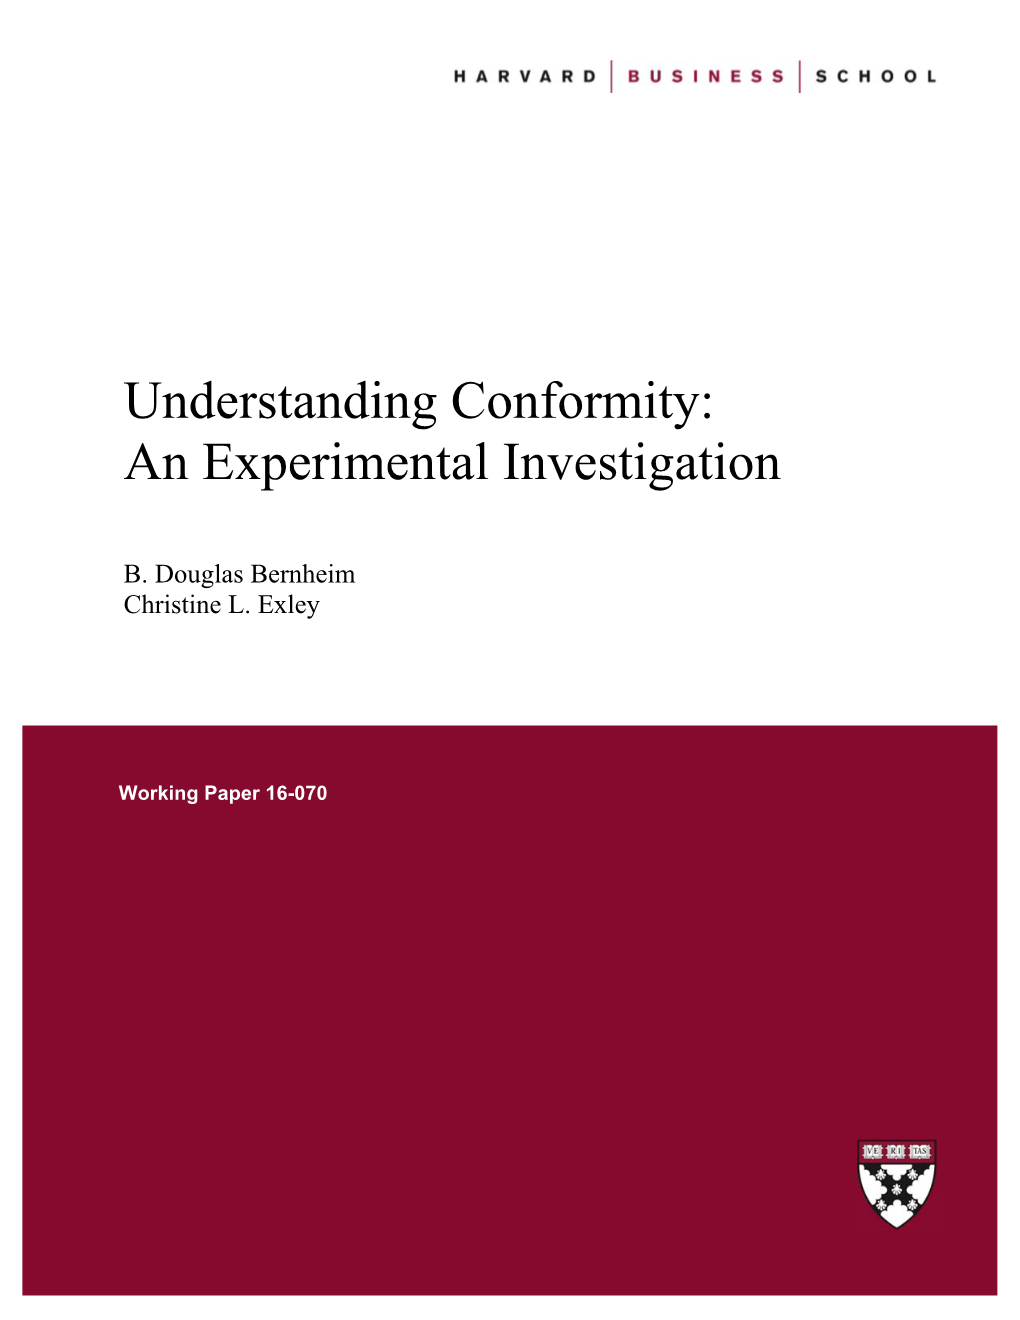 Understanding Conformity: an Experimental Investigation